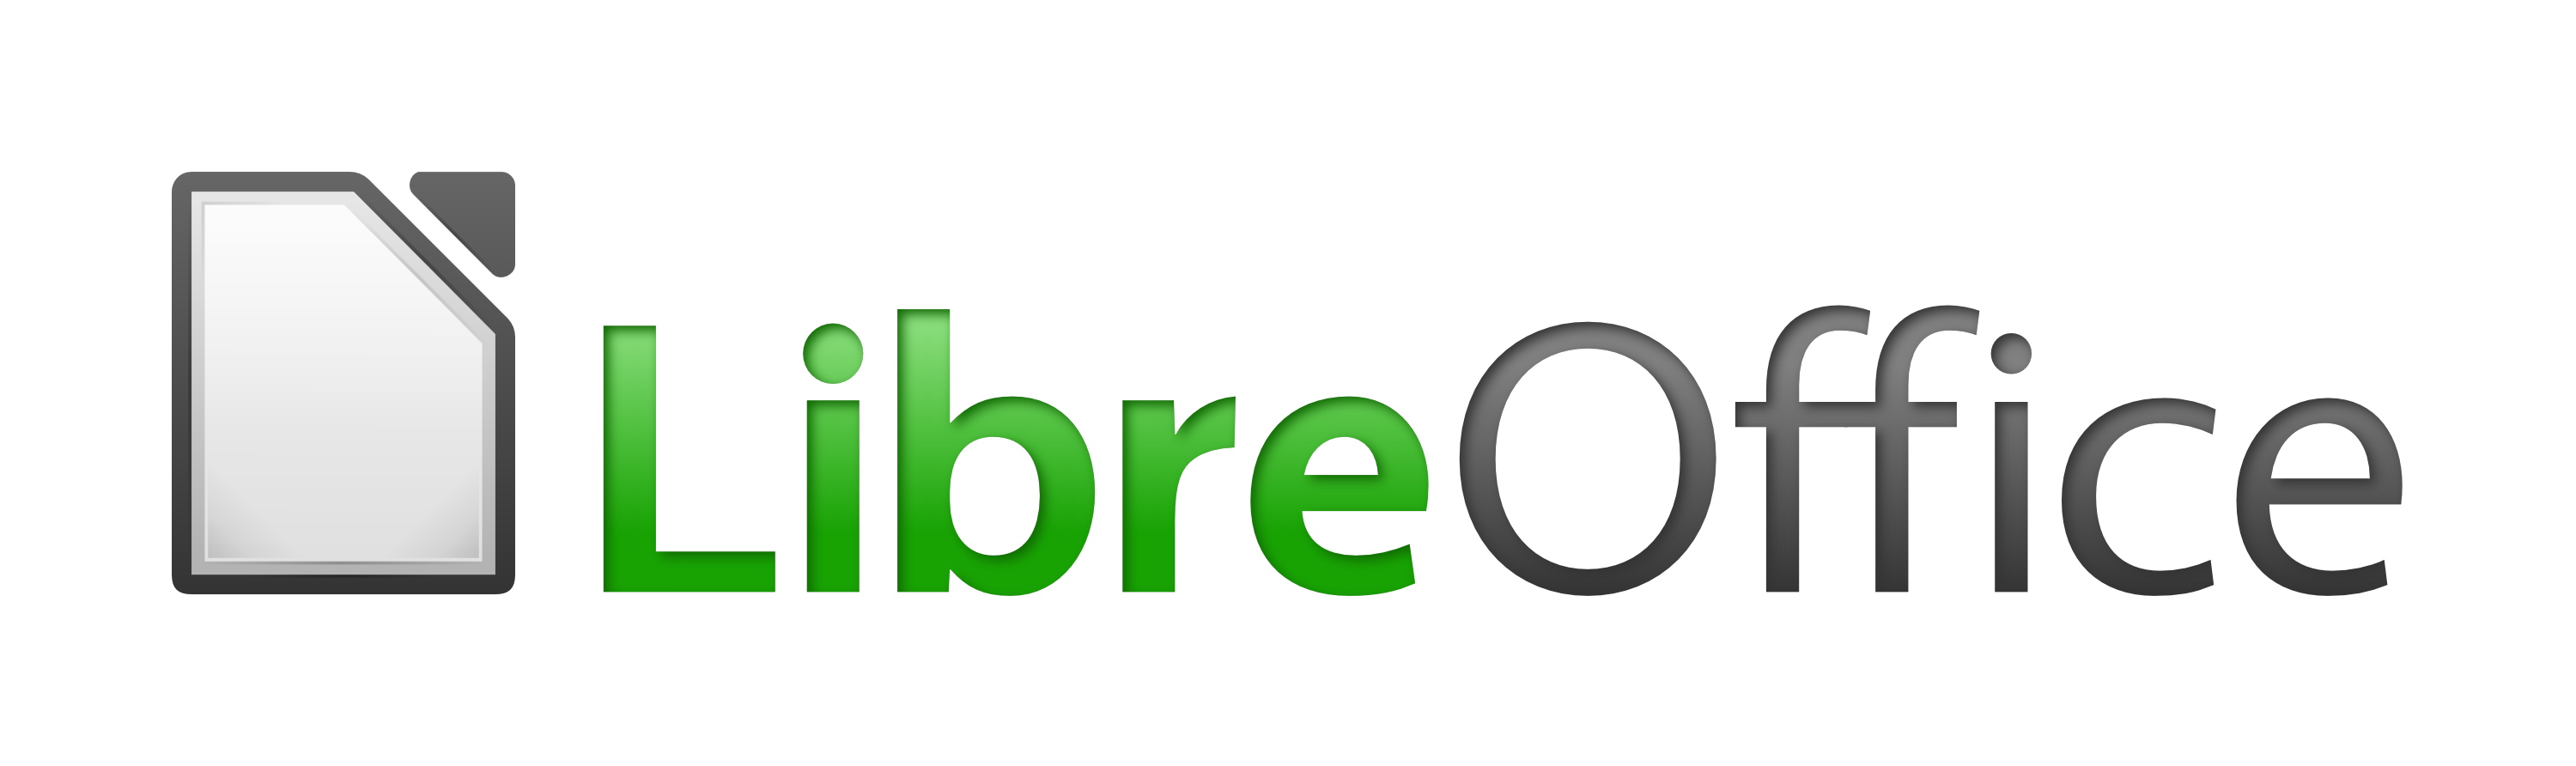 LibreOffice external logo 3000px.png